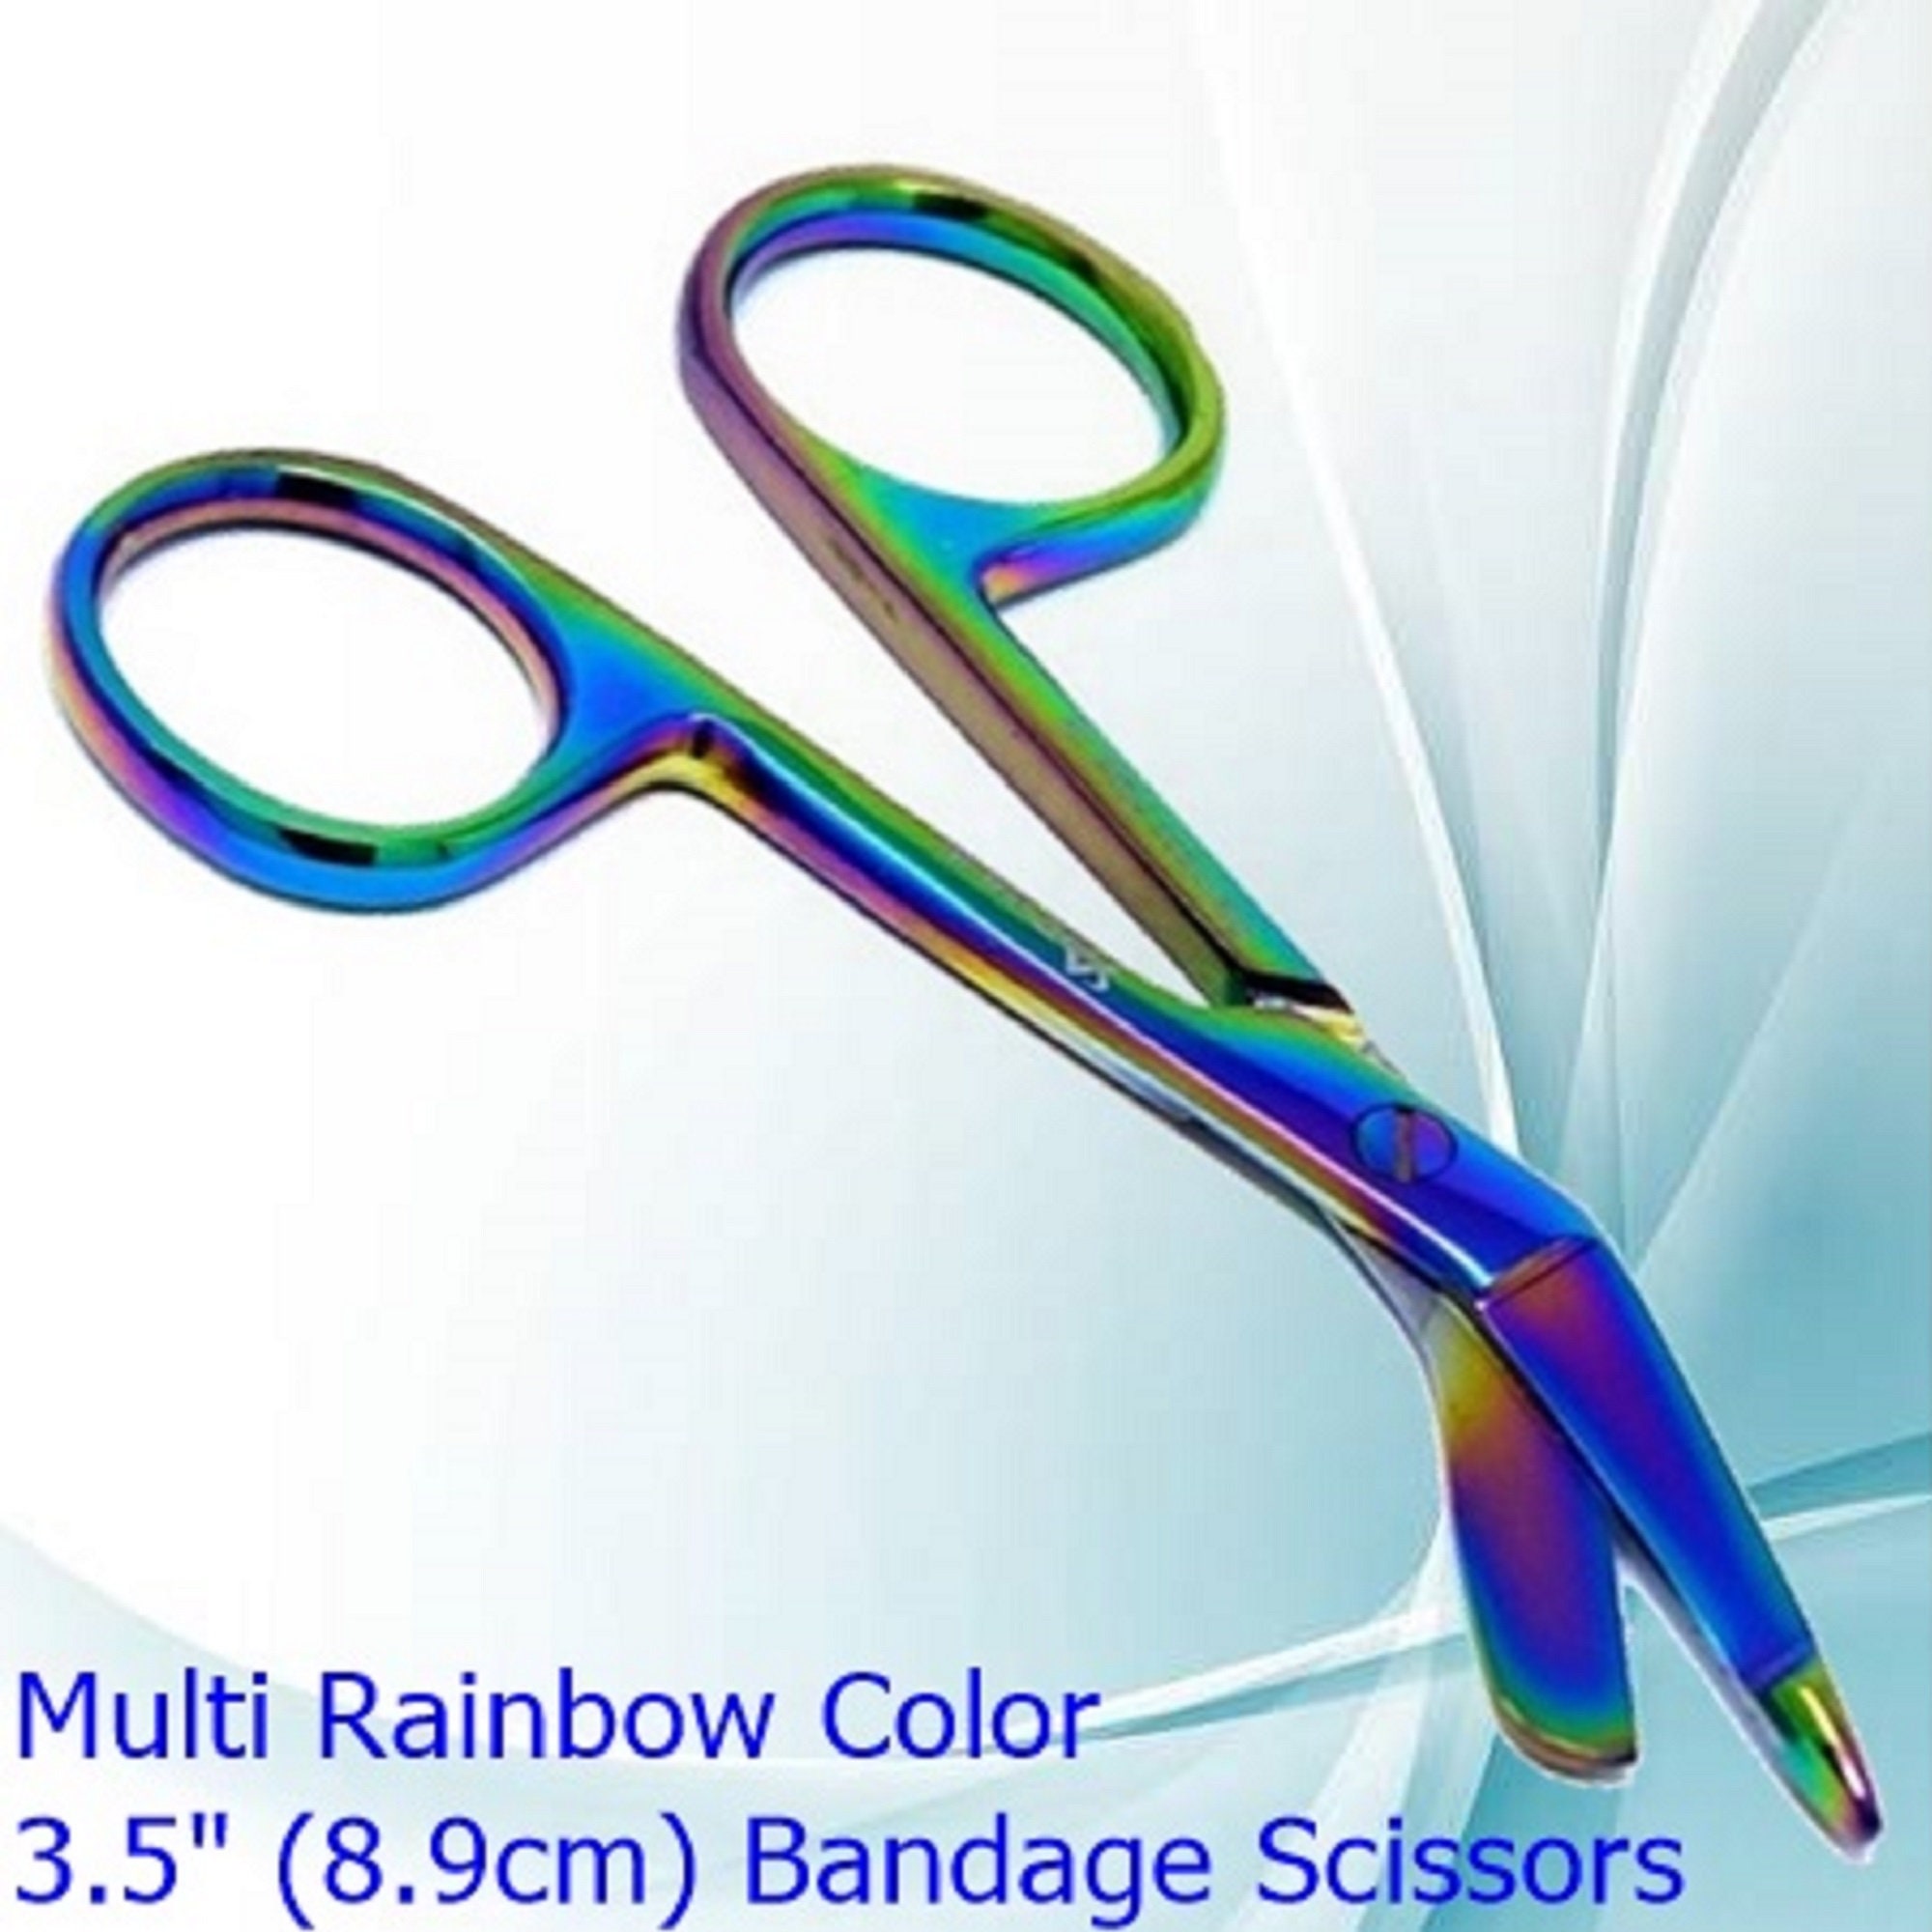 Small Scissors, Embroidery Scissors, Pink Scissors, Rainbow